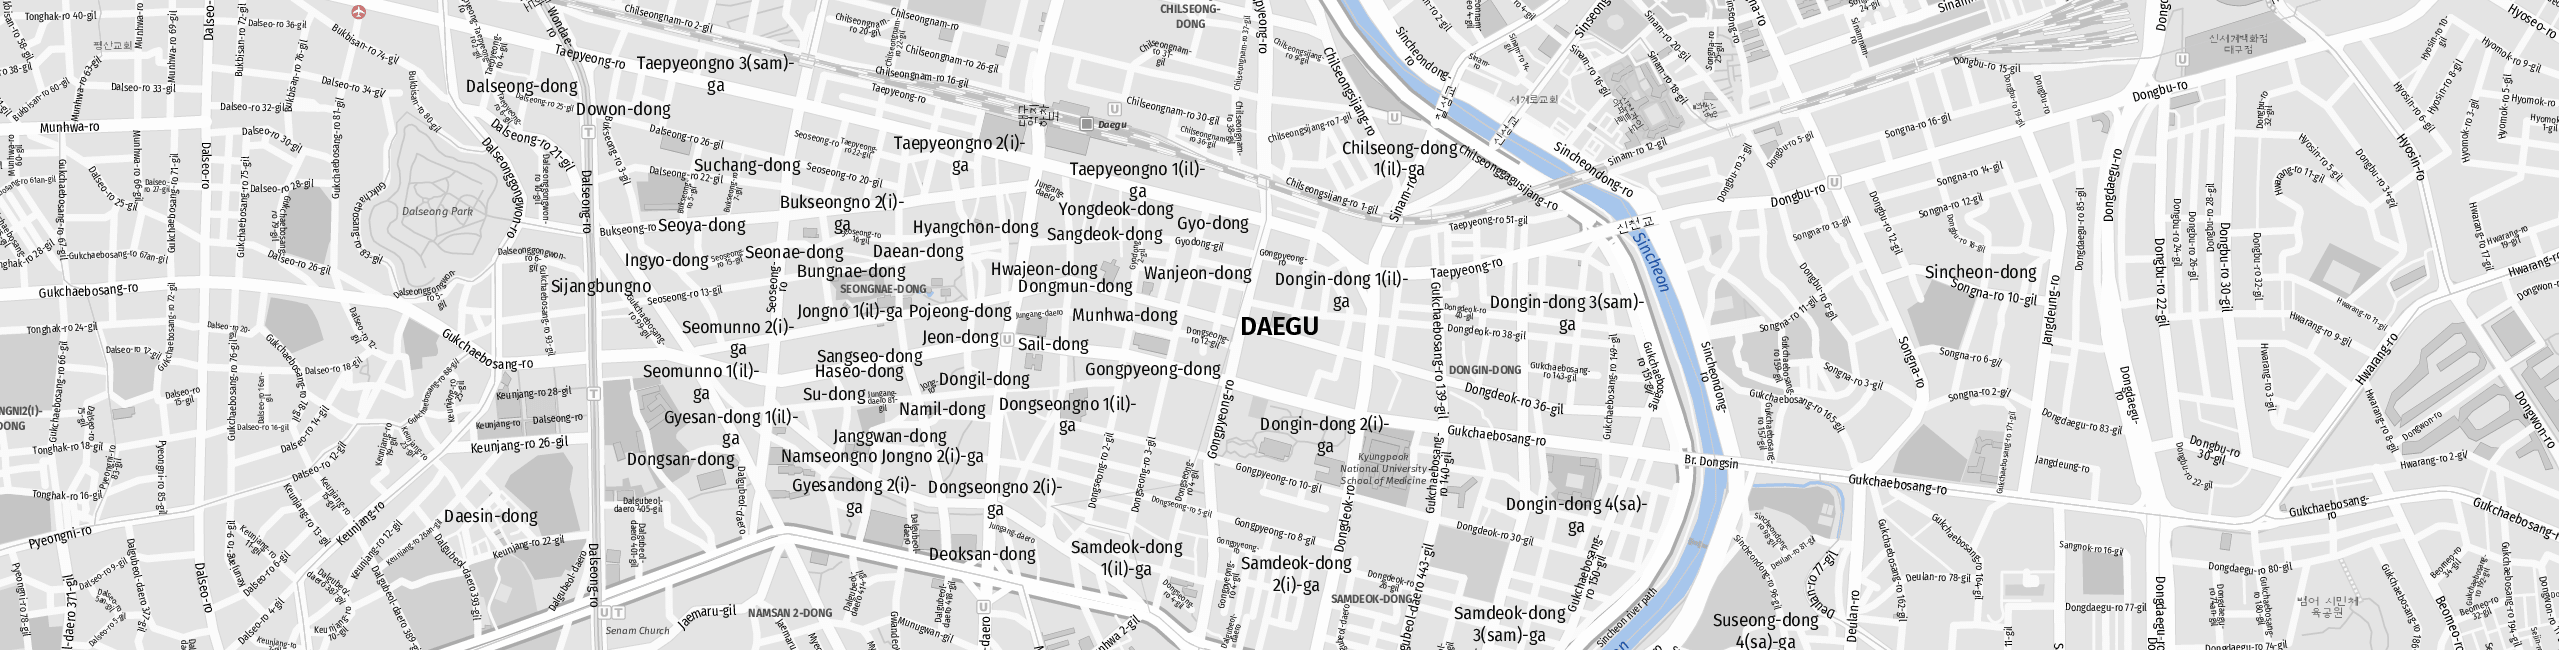 Stadtplan Daegu zum Downloaden.